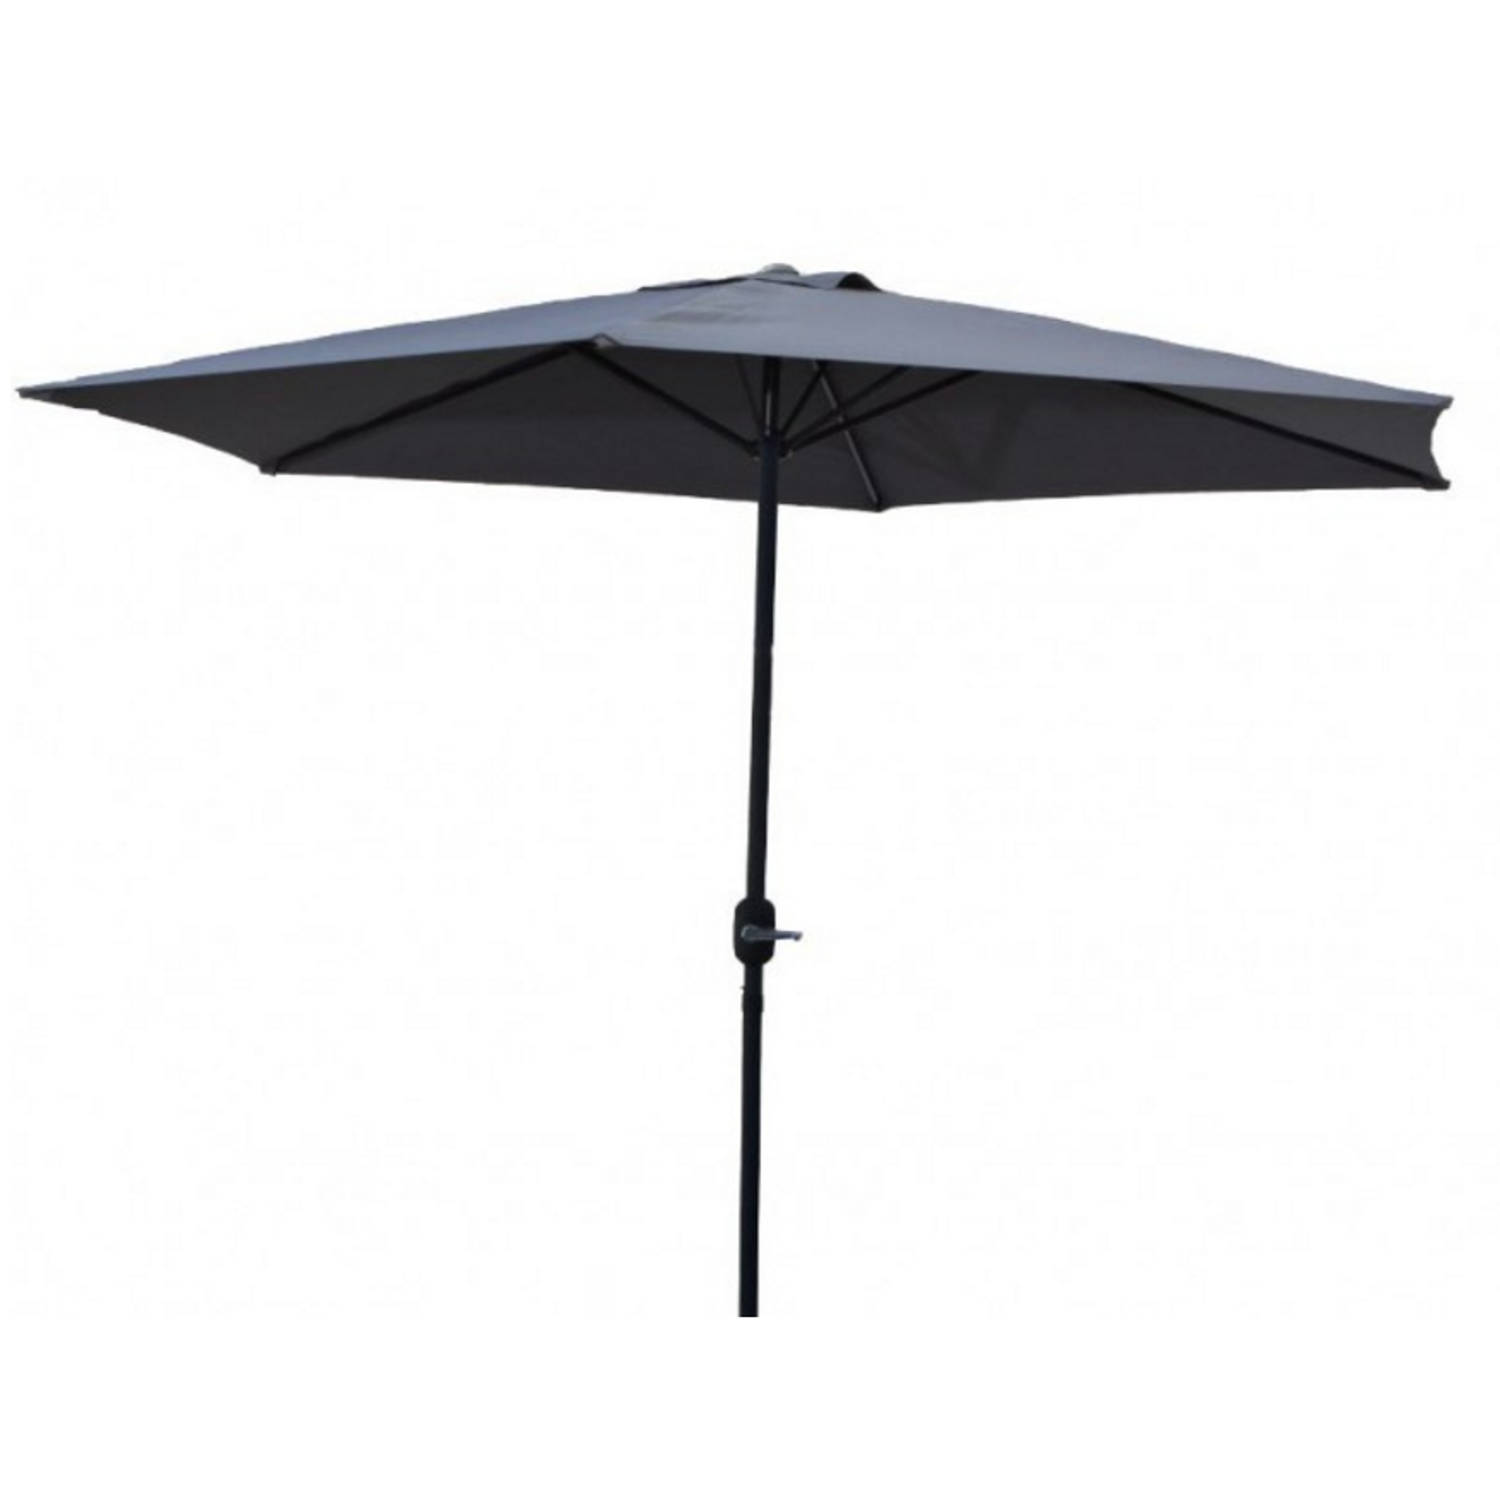 Degamo Parasol parasol 300cm strakke parasol zonnescherm grijs